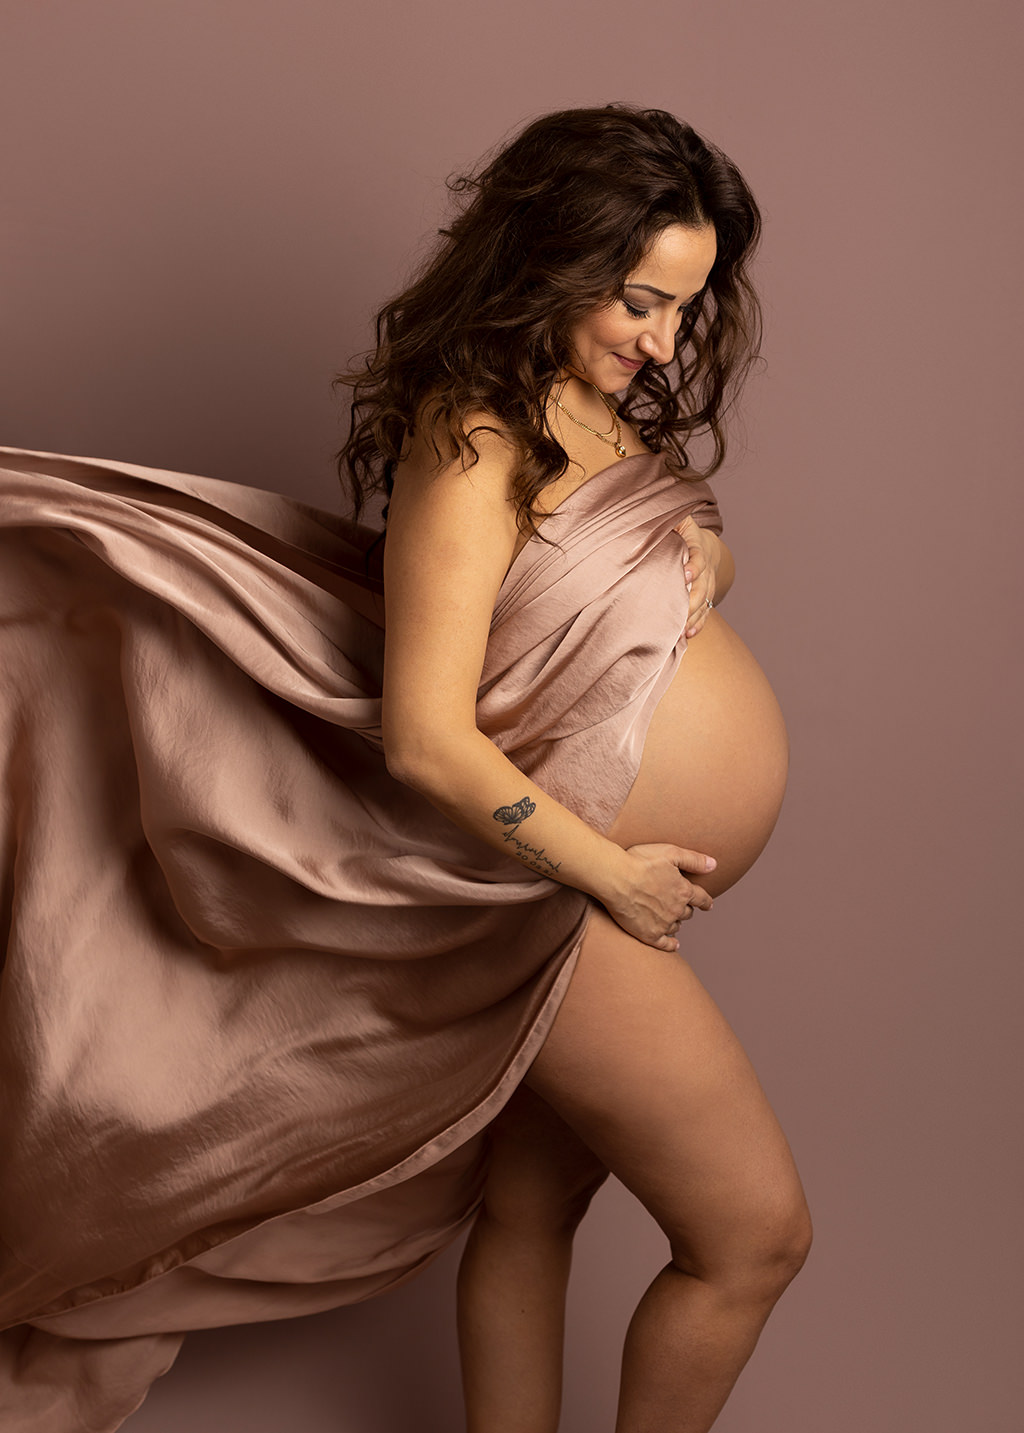 gravidfotografering alingsås fotograf maria ekblad studio